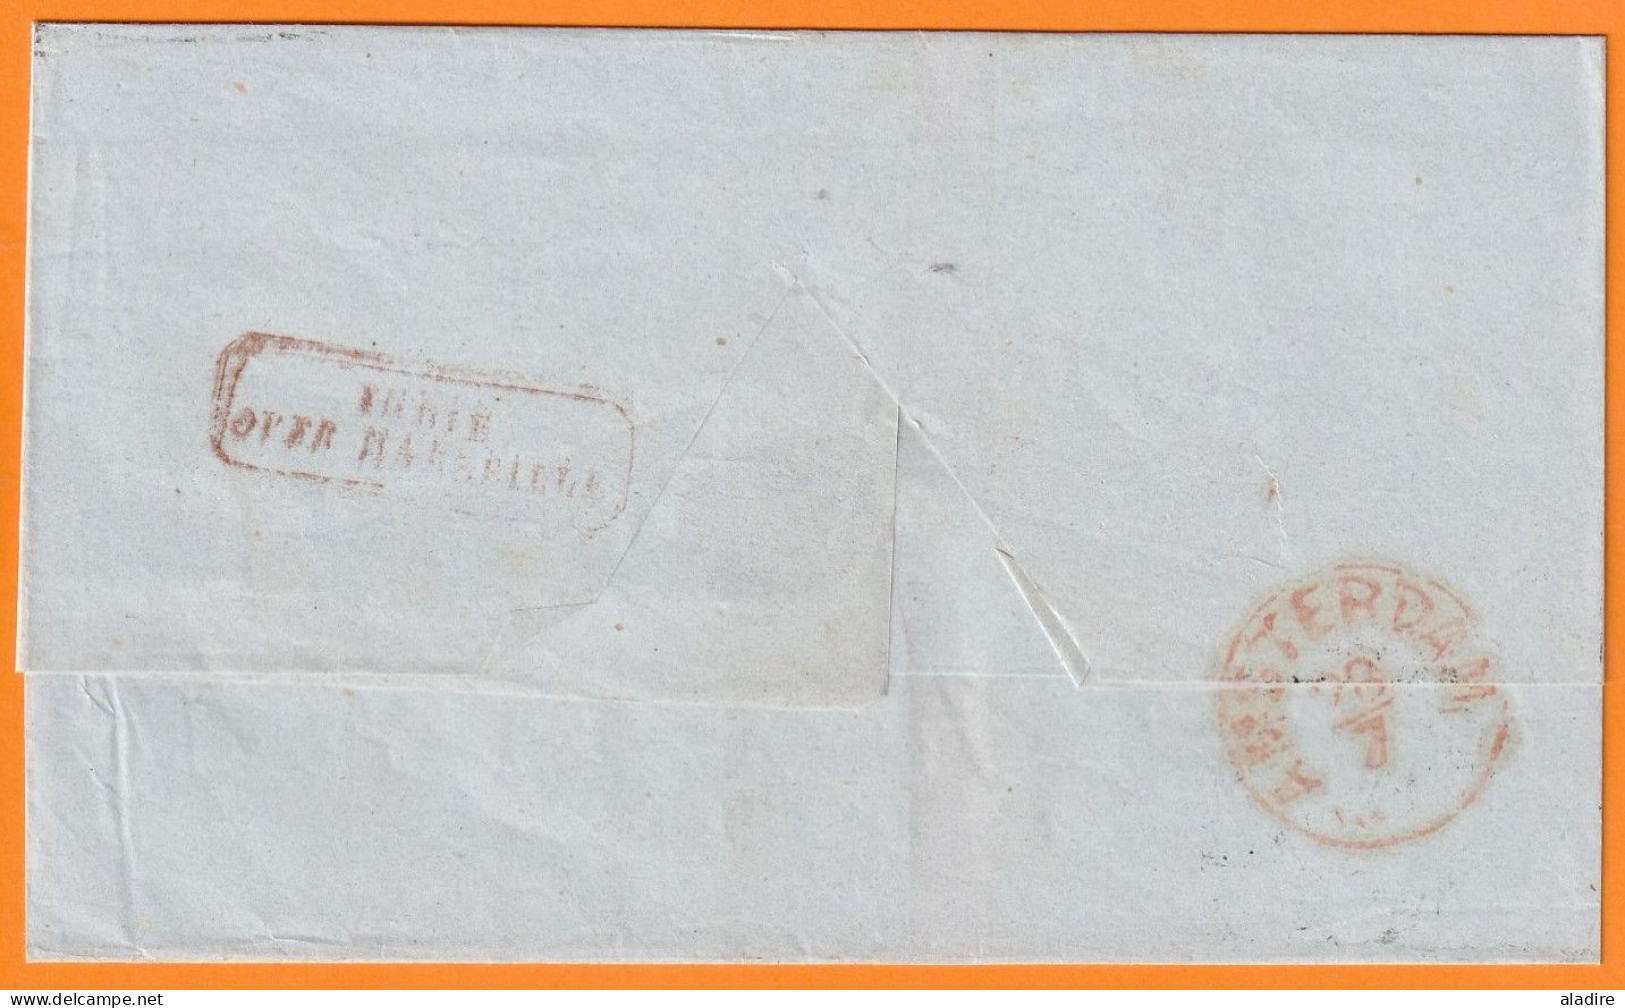 1854 - Folded Cover From SAMARANG, Semarang, Java To AMSTERDAM, Netherland Via MARSEILLE, France - Tax 120 ! - Netherlands Indies